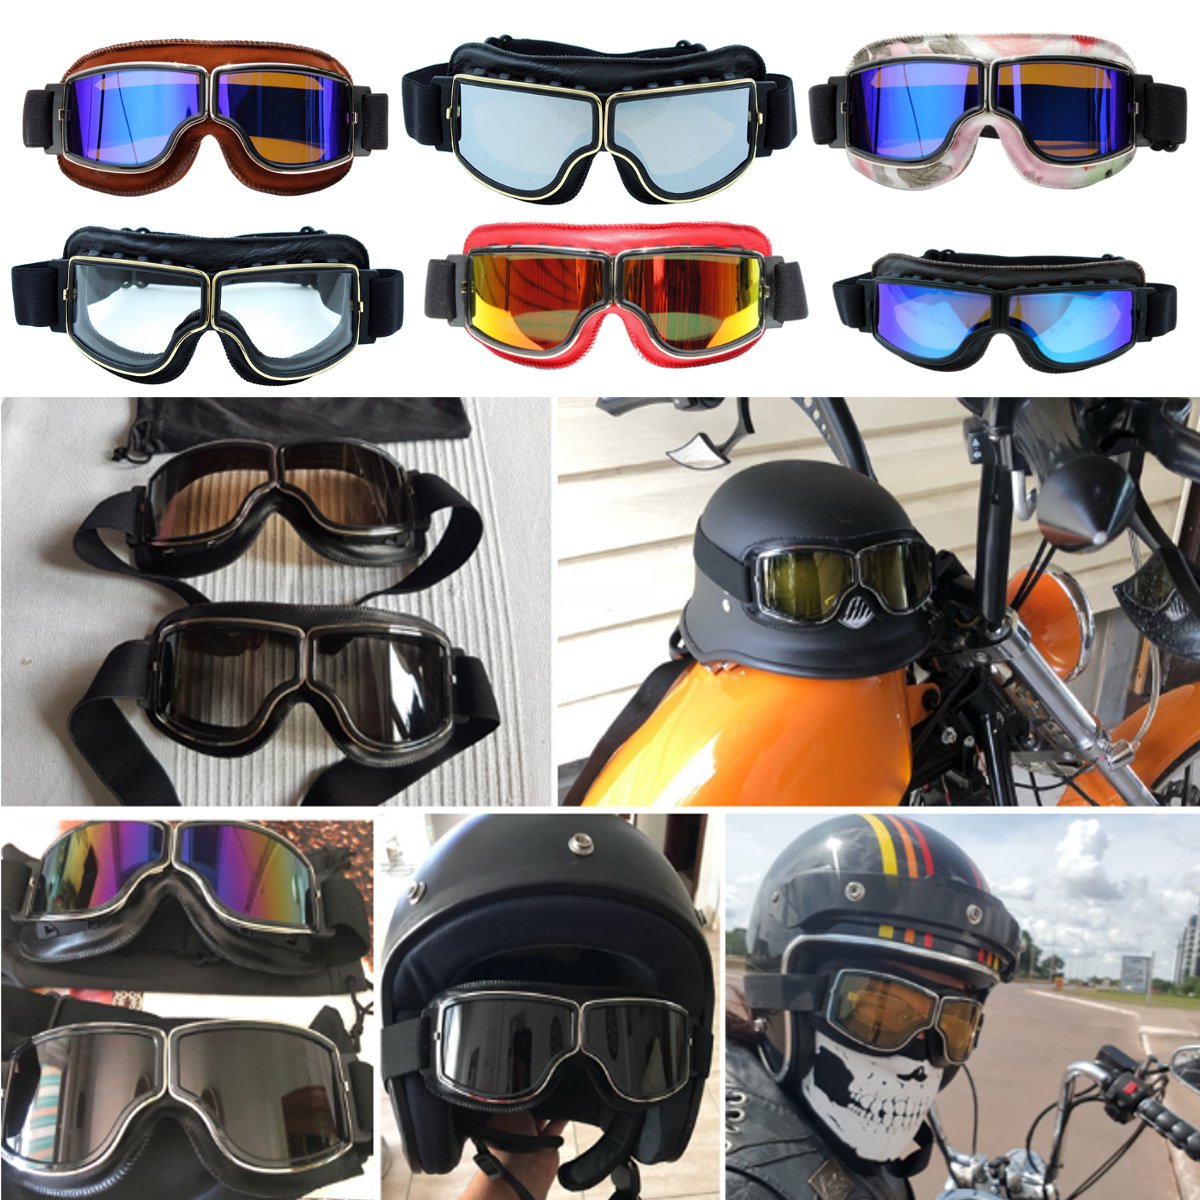 Coral Vintage Goggles Motorcycle Leather Goggles Glasses Cruiser Folding Helmet Eyewear